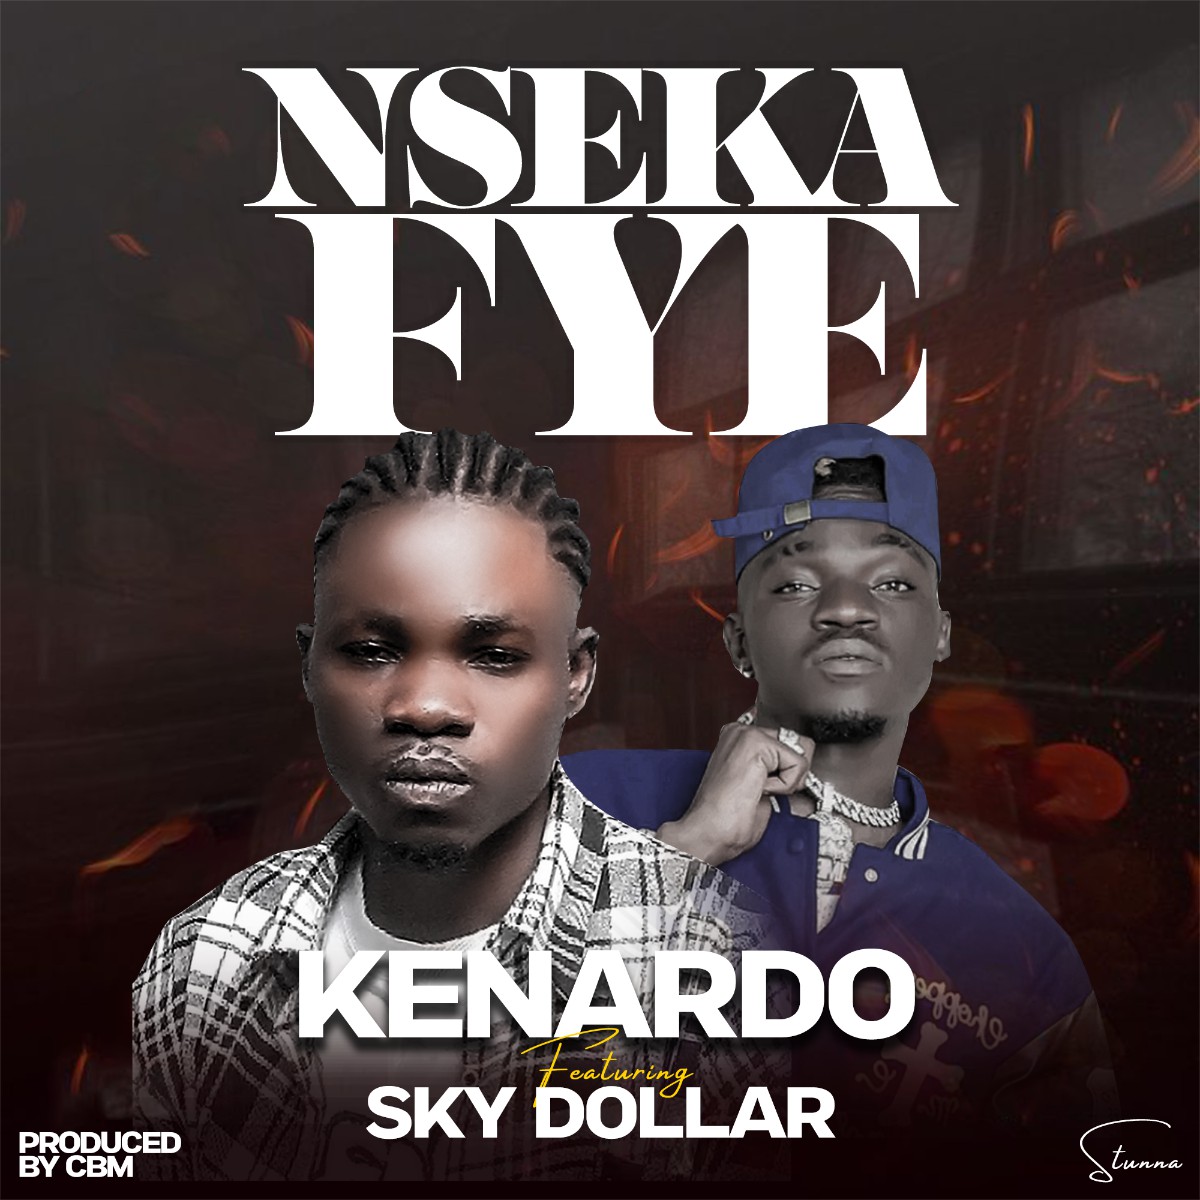 Kenardo ft. Sky Dollar - Nsekafye